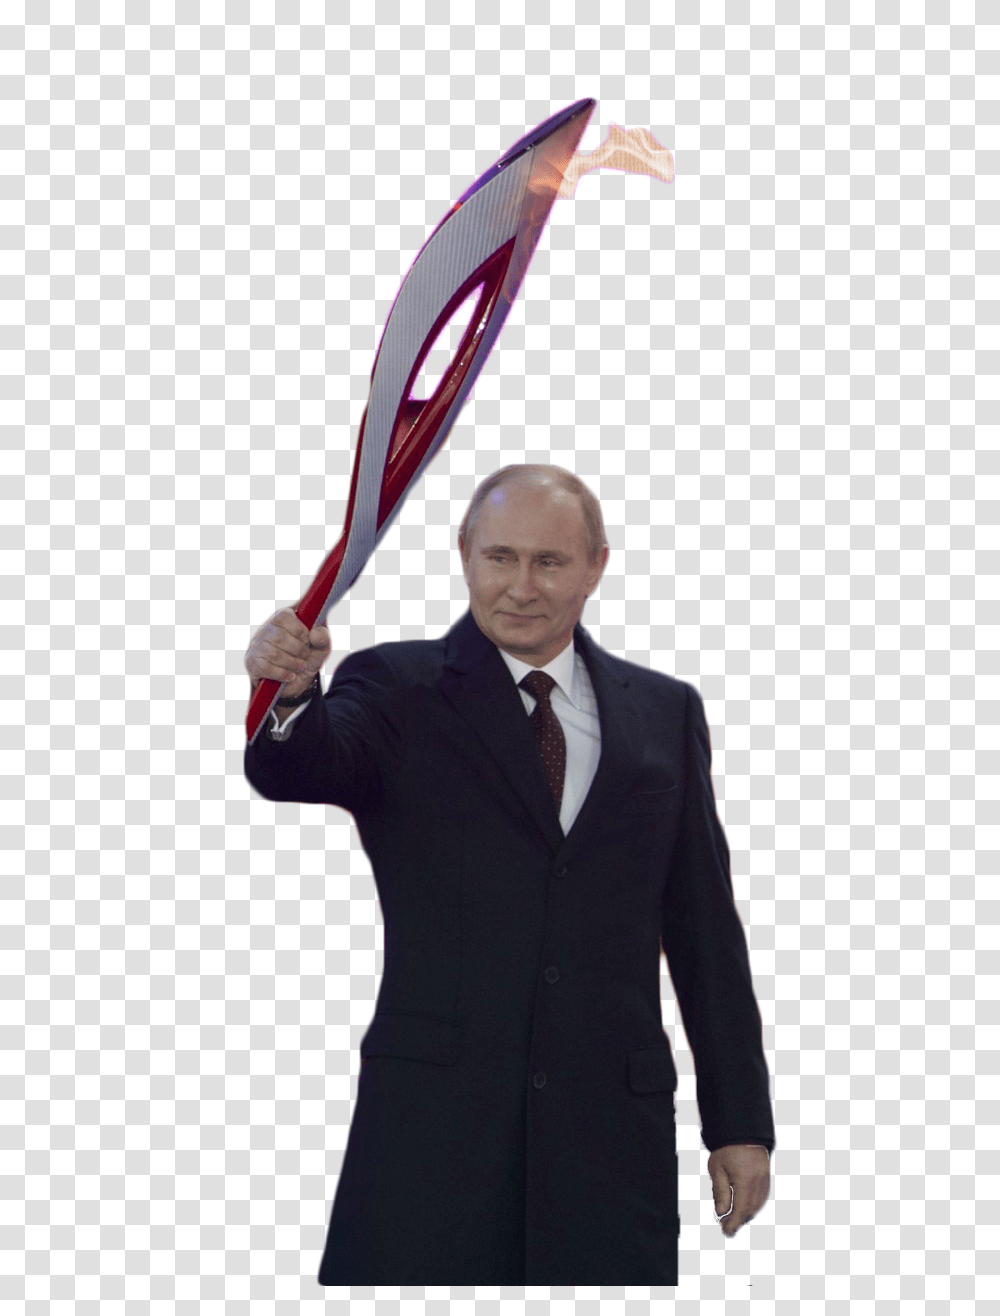 Celebrities In Vladimir Putin, Person, Suit, Overcoat Transparent Png